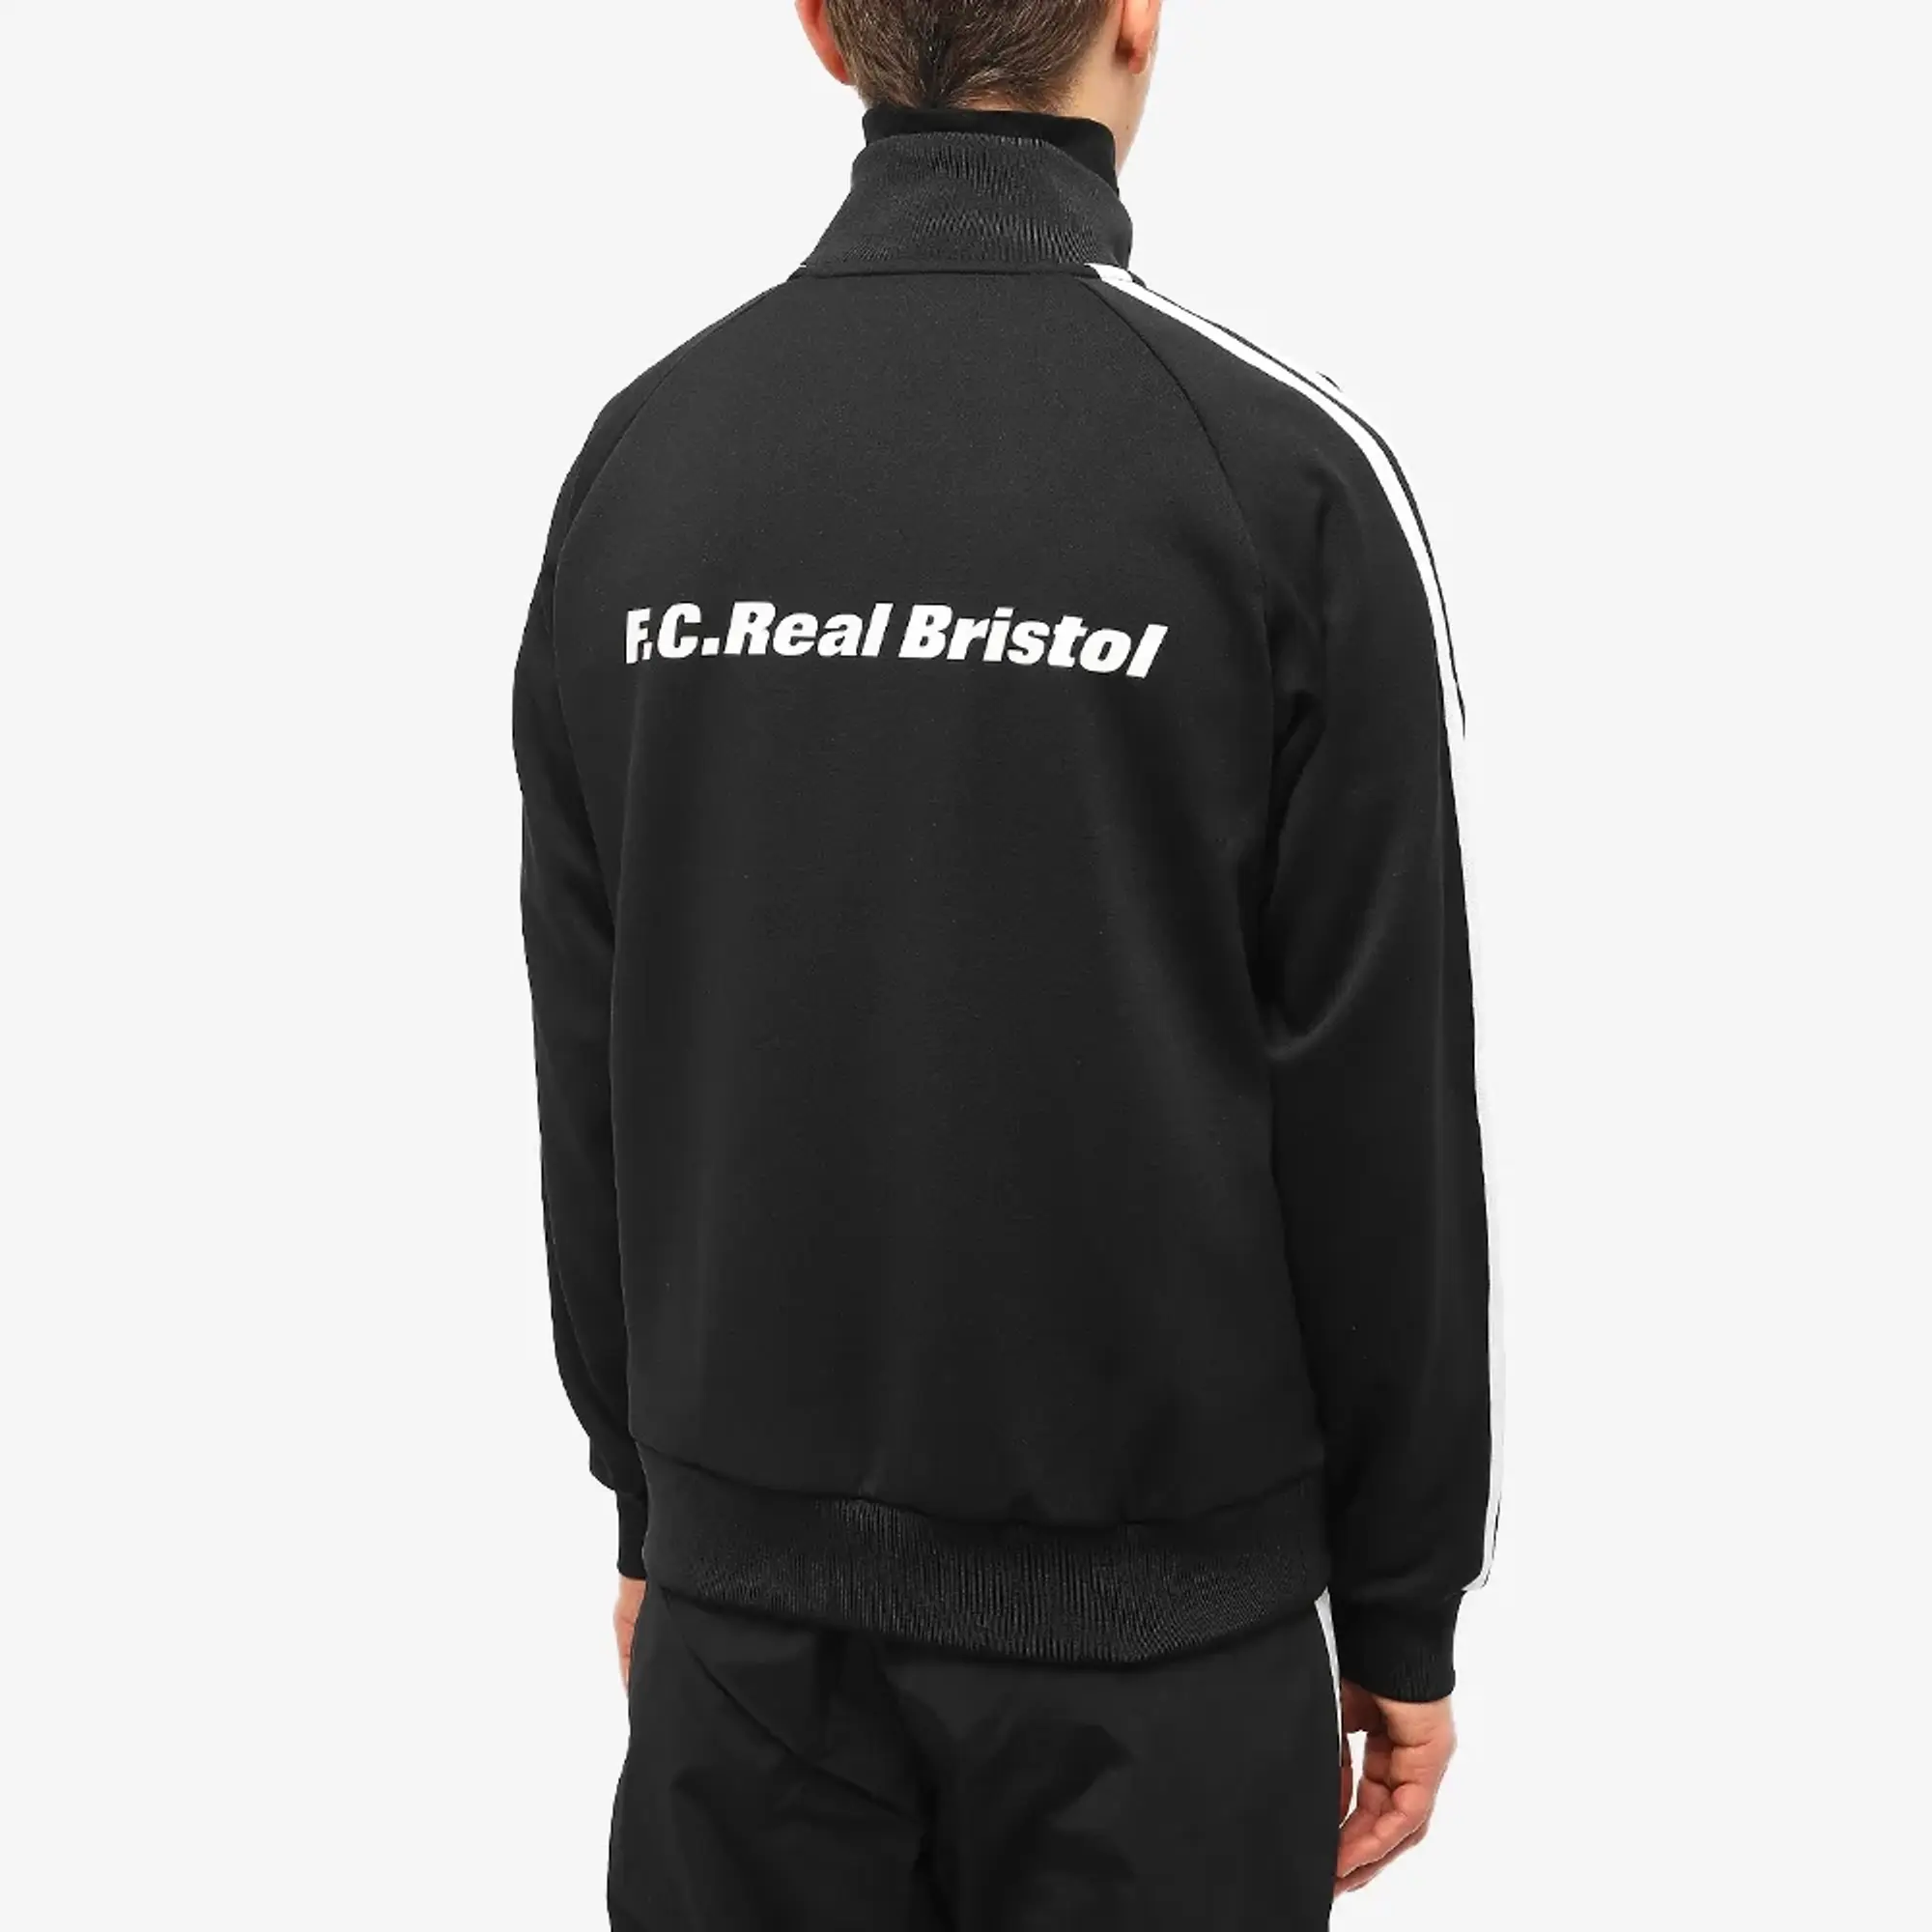 F.C. Real Bristol FC Real Bristol Training Track Jacket Black